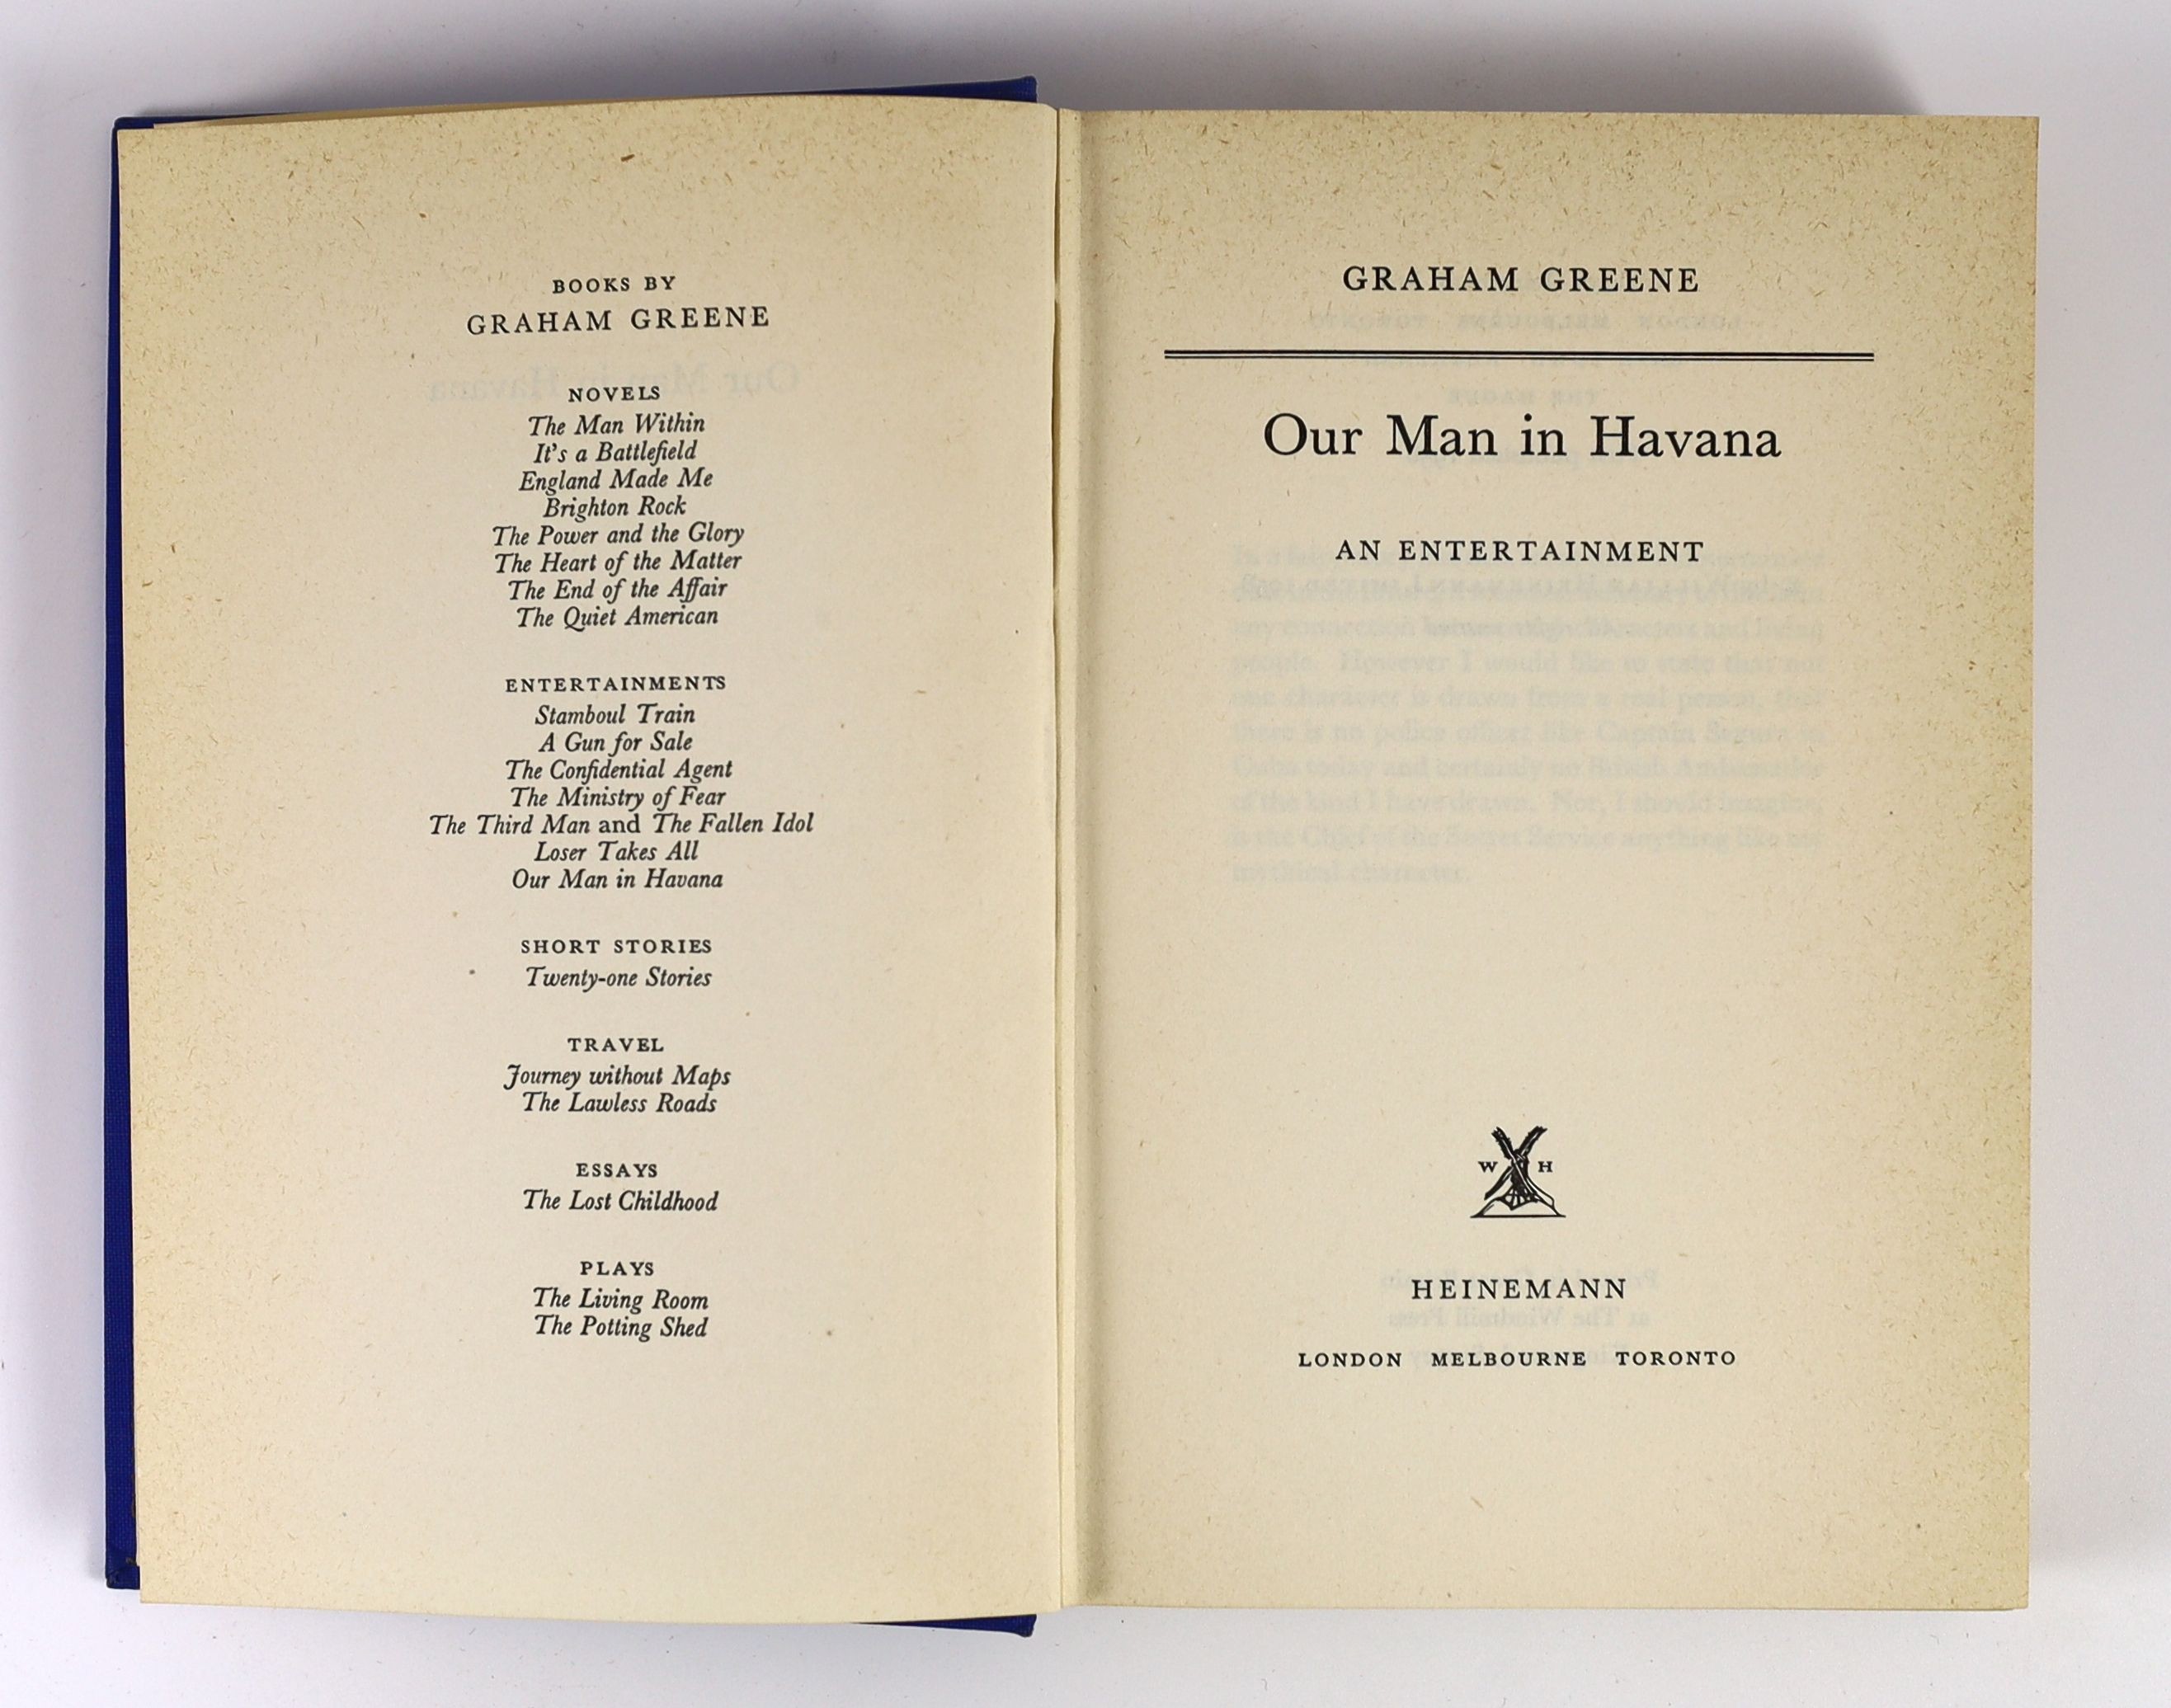 Greene, Graham - Our Man in Havana, 1st edition, in clipped d/j, William Heinemann, London, 1958